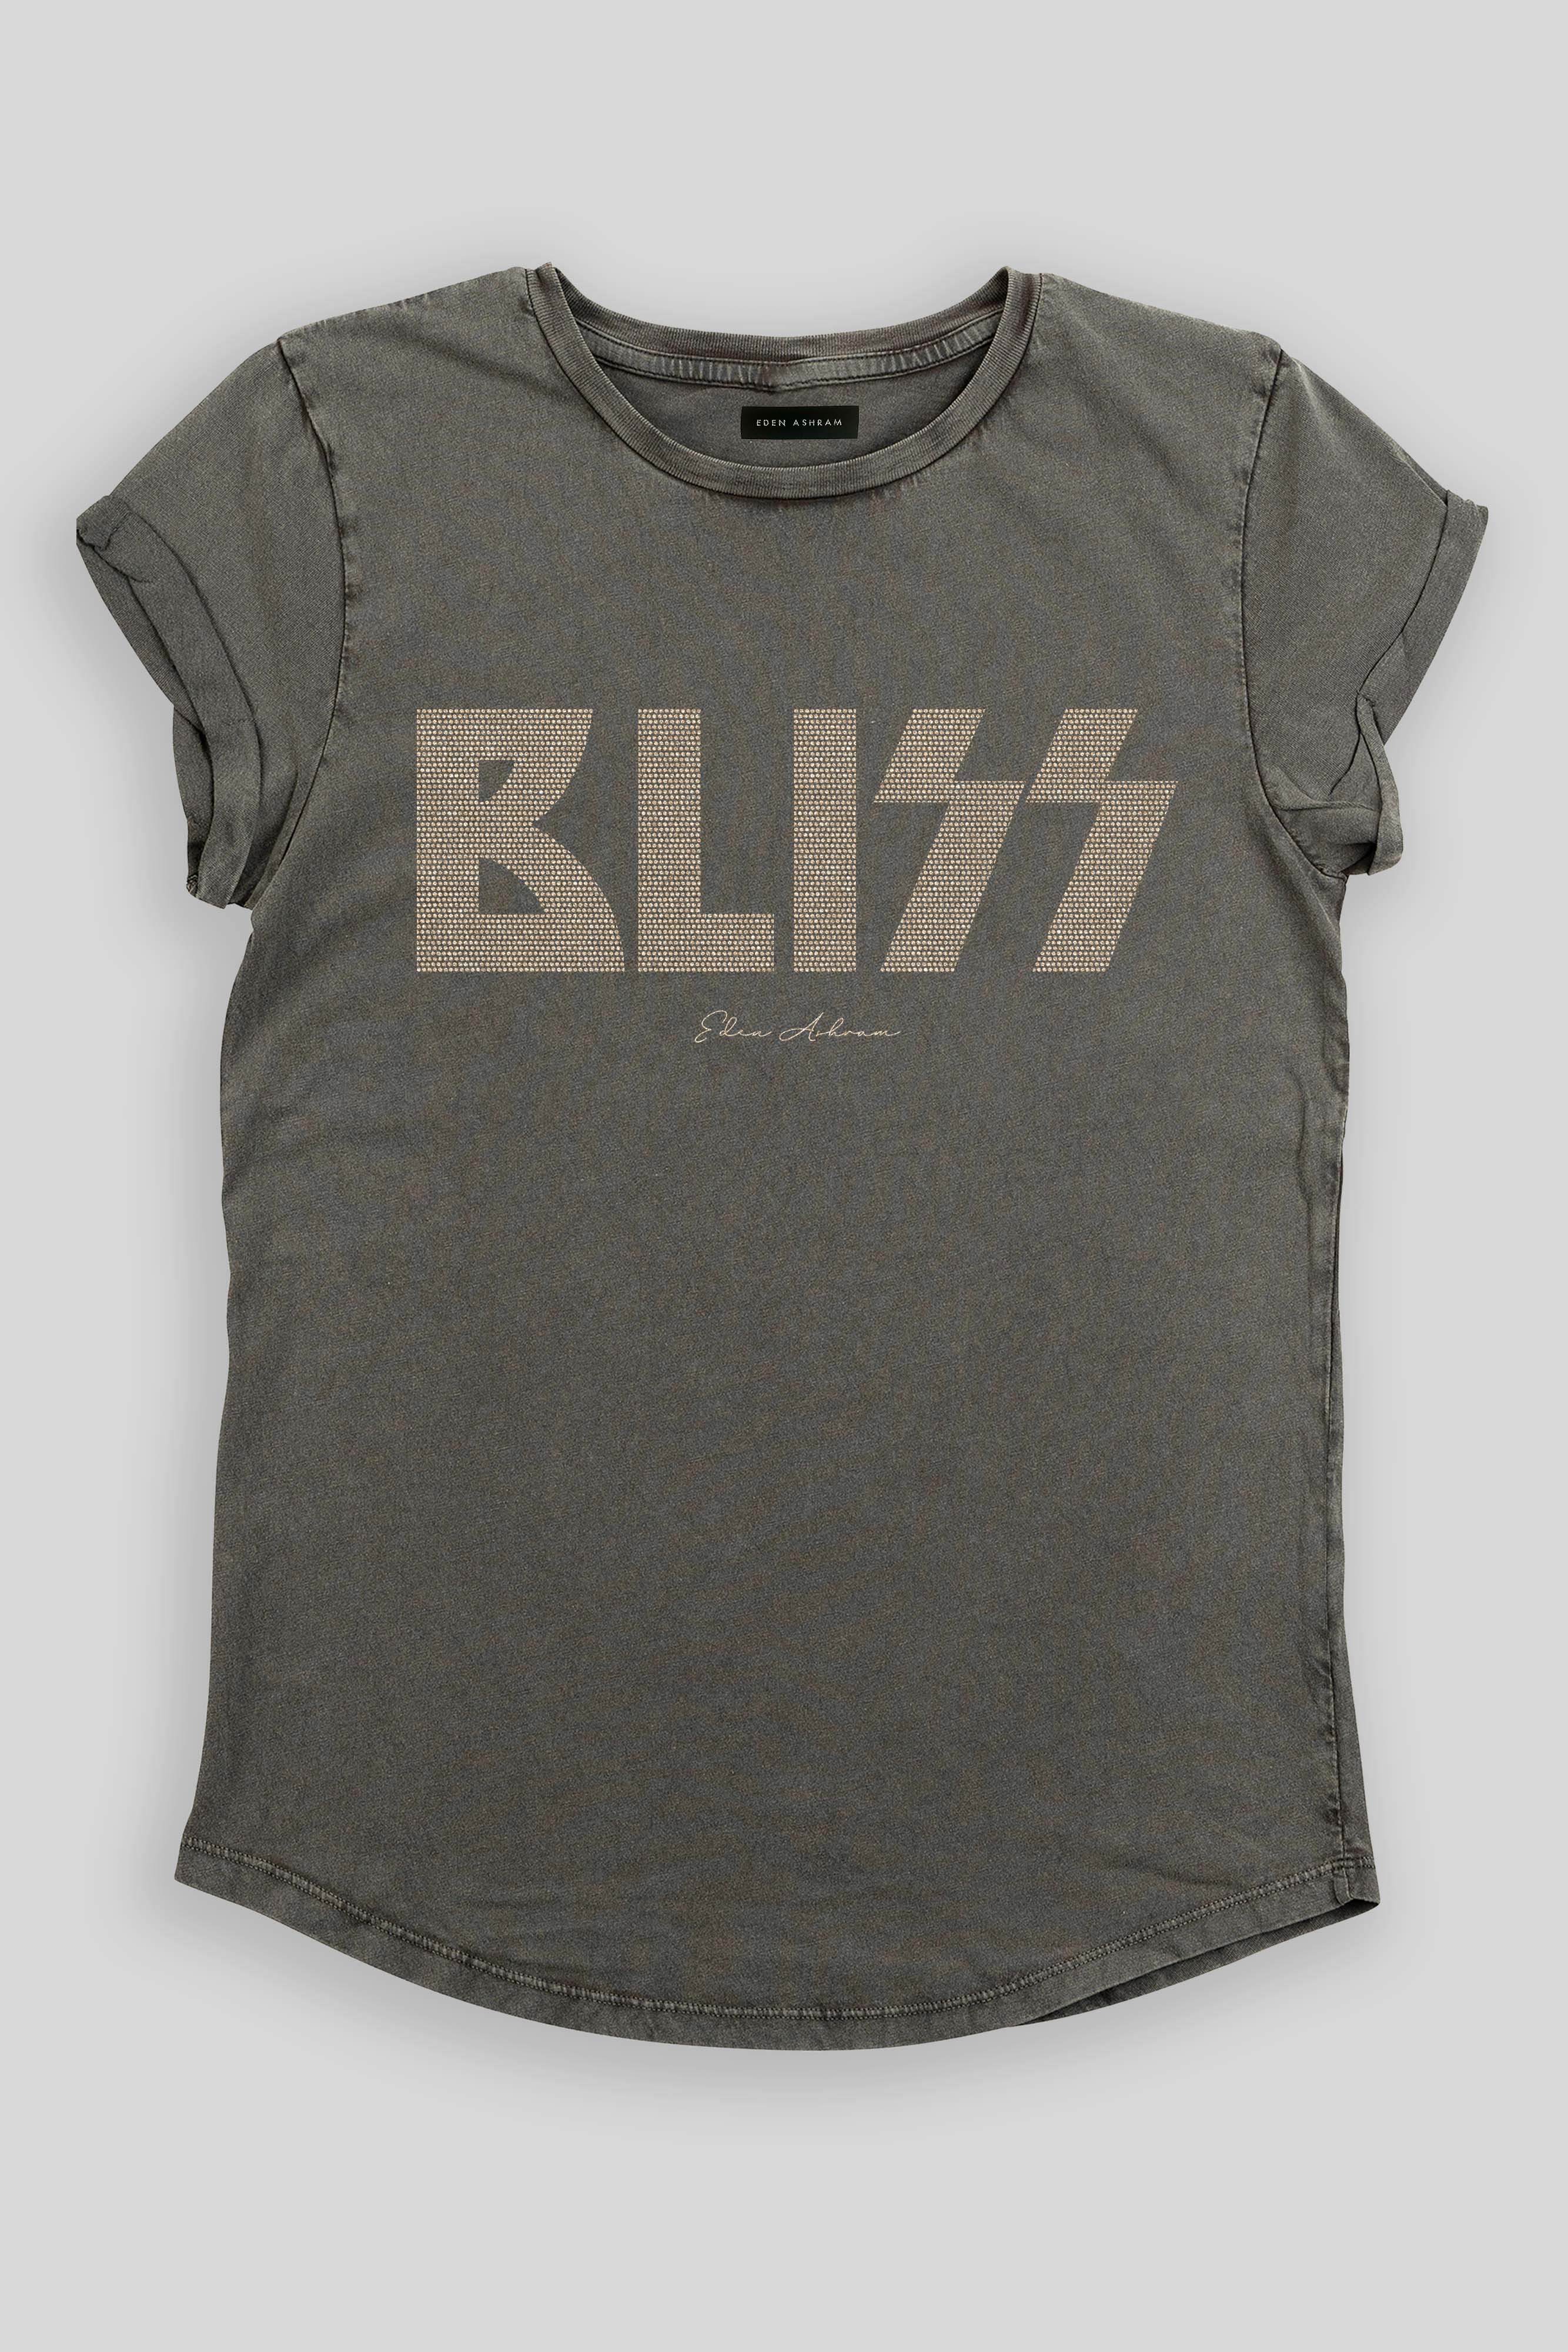 EDEN ASHRAM BLISS Rolled Sleeve Tour T-Shirt Stonewash Grey | Gold